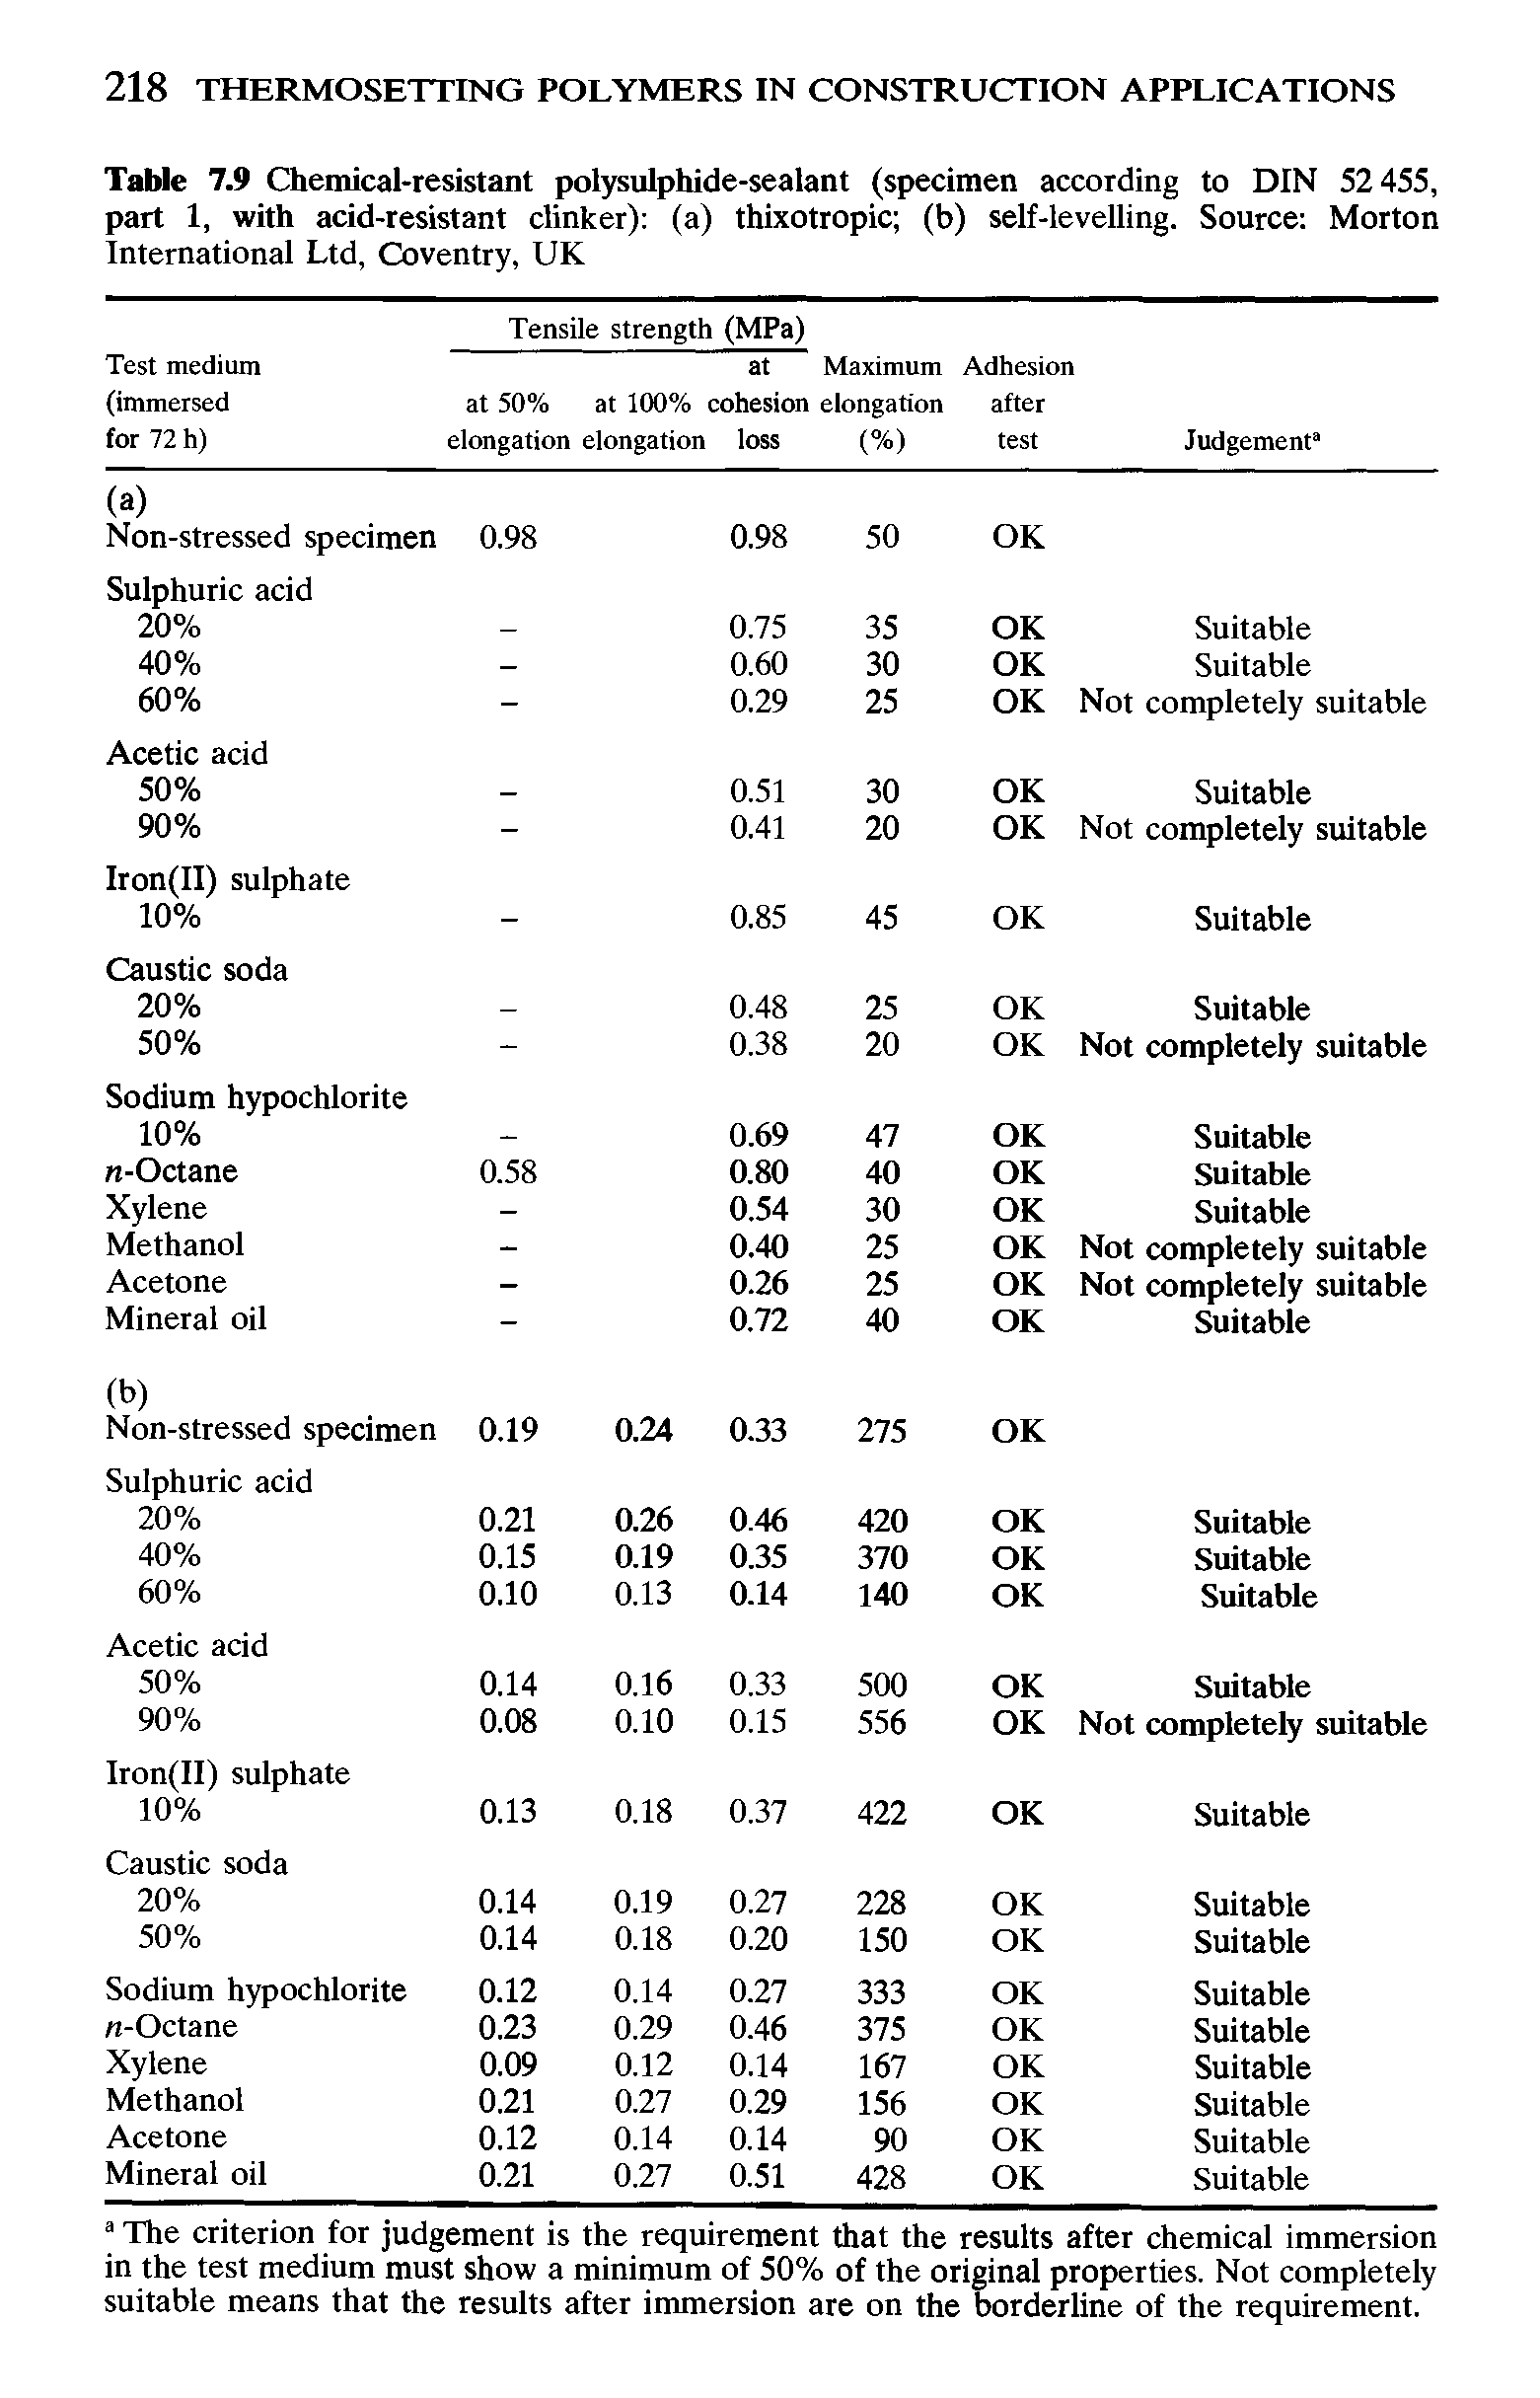 Table 7.9 Chemical-resistant polysulphide-sealant (specimen according to DIN 52 455, part 1, with acid-resistant clinker) (a) thixotropic (b) self-levelling. Source Morton International Ltd, Coventry, UK...